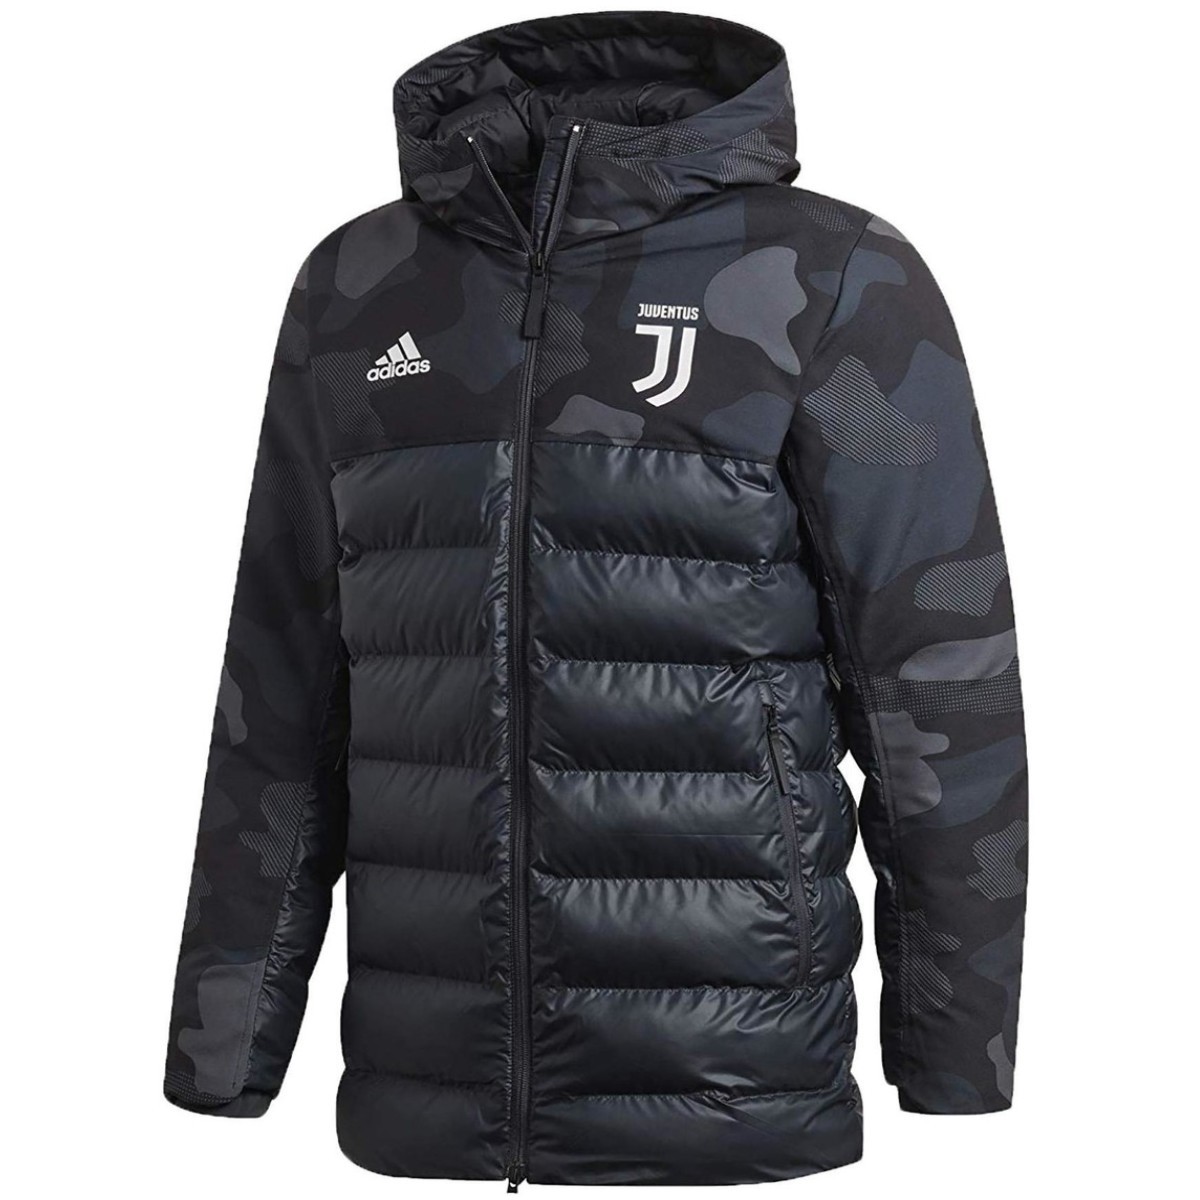 adidas jacket 2019